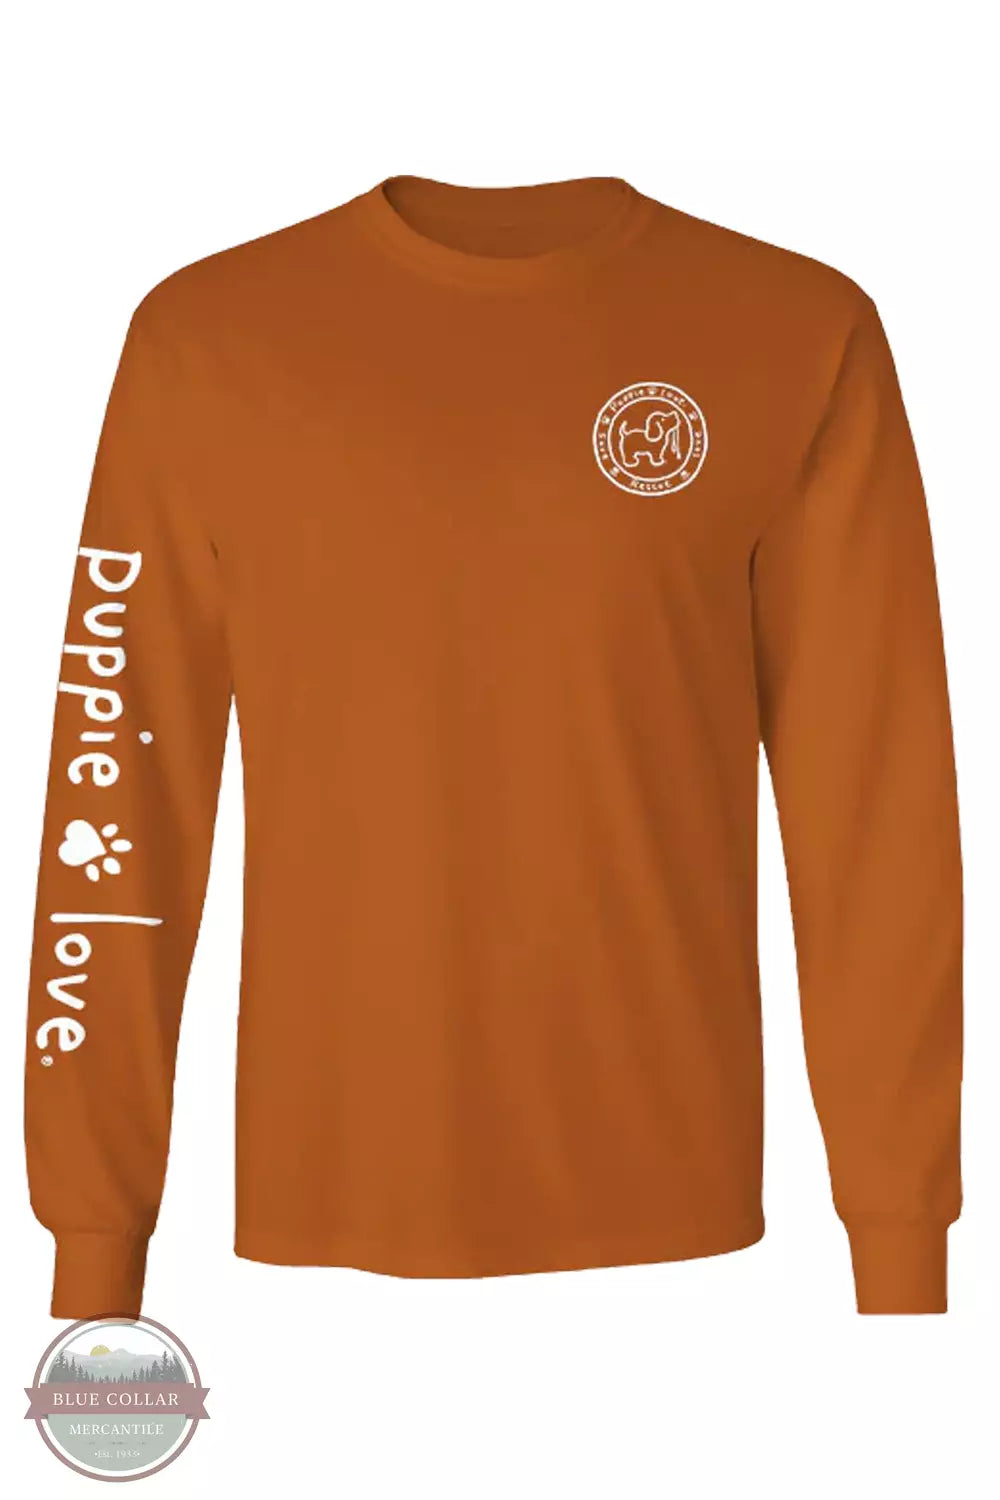 Puppie Love SPL1473 Barktoberfest Dirndl Pup Long Sleeve T-Shirt in Texas Orange Front View